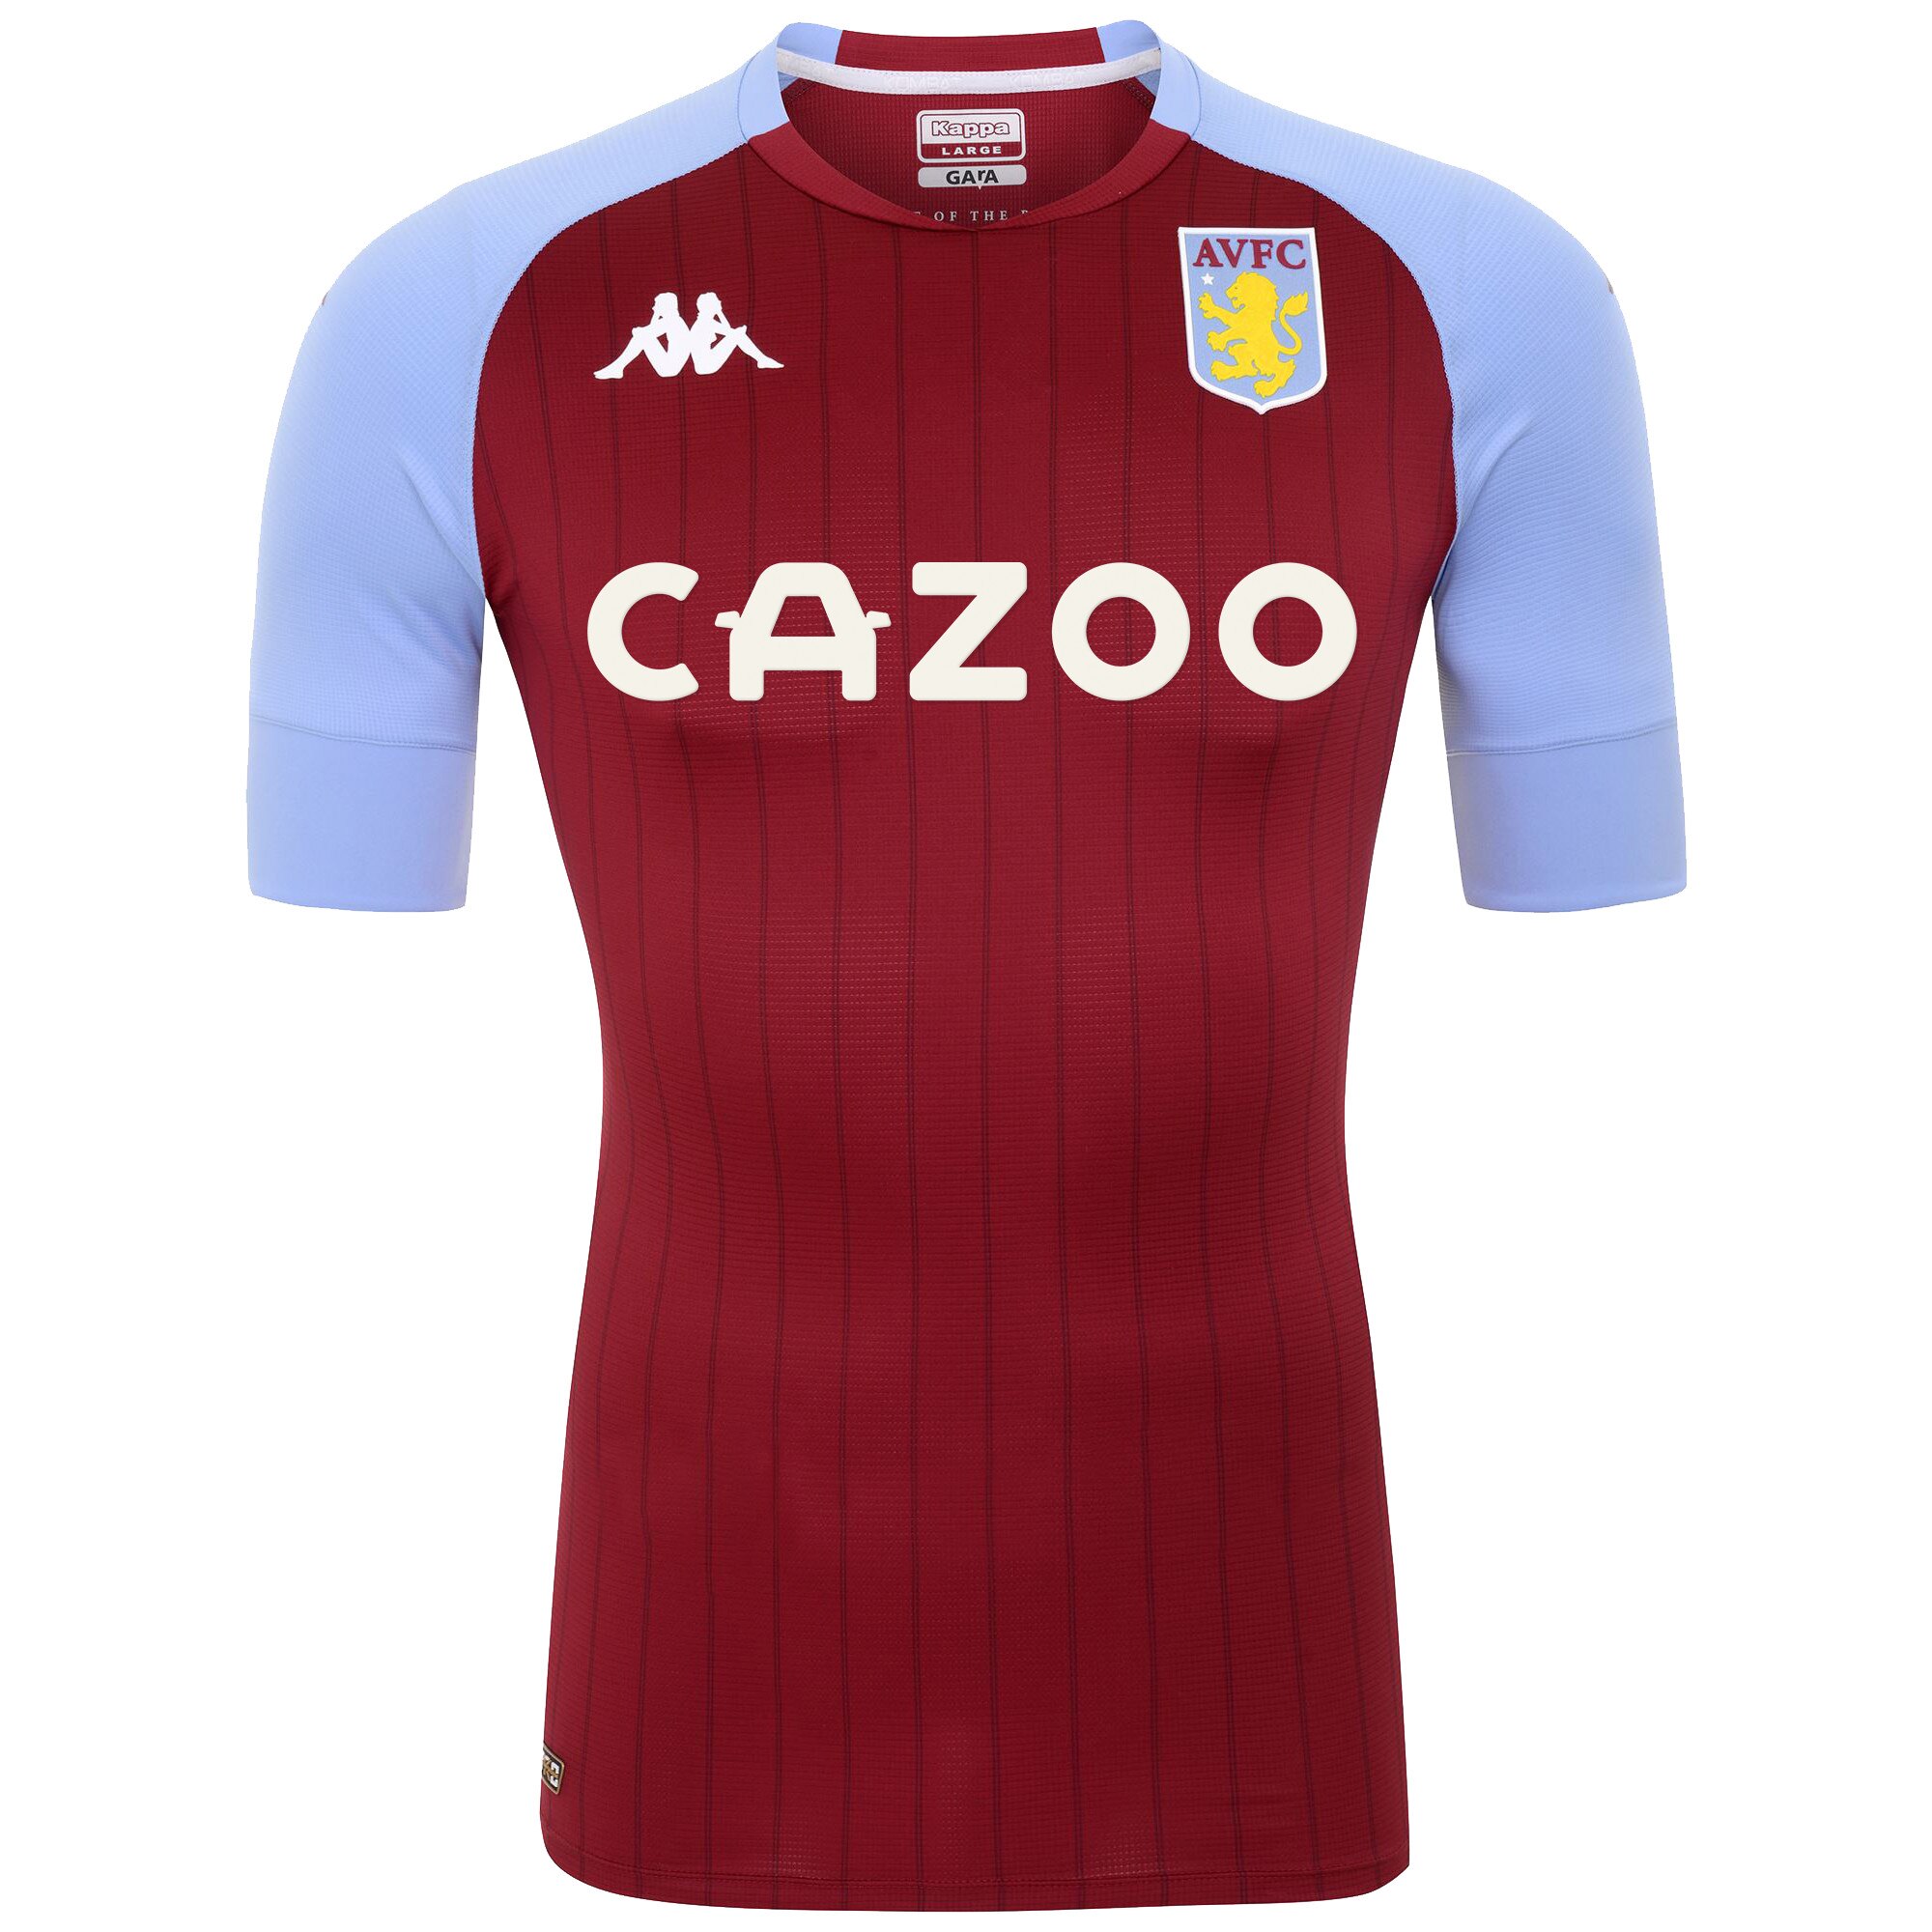 Aston Villa Home Pro Shirt 2020-21 with Douglas Luiz 6 printing